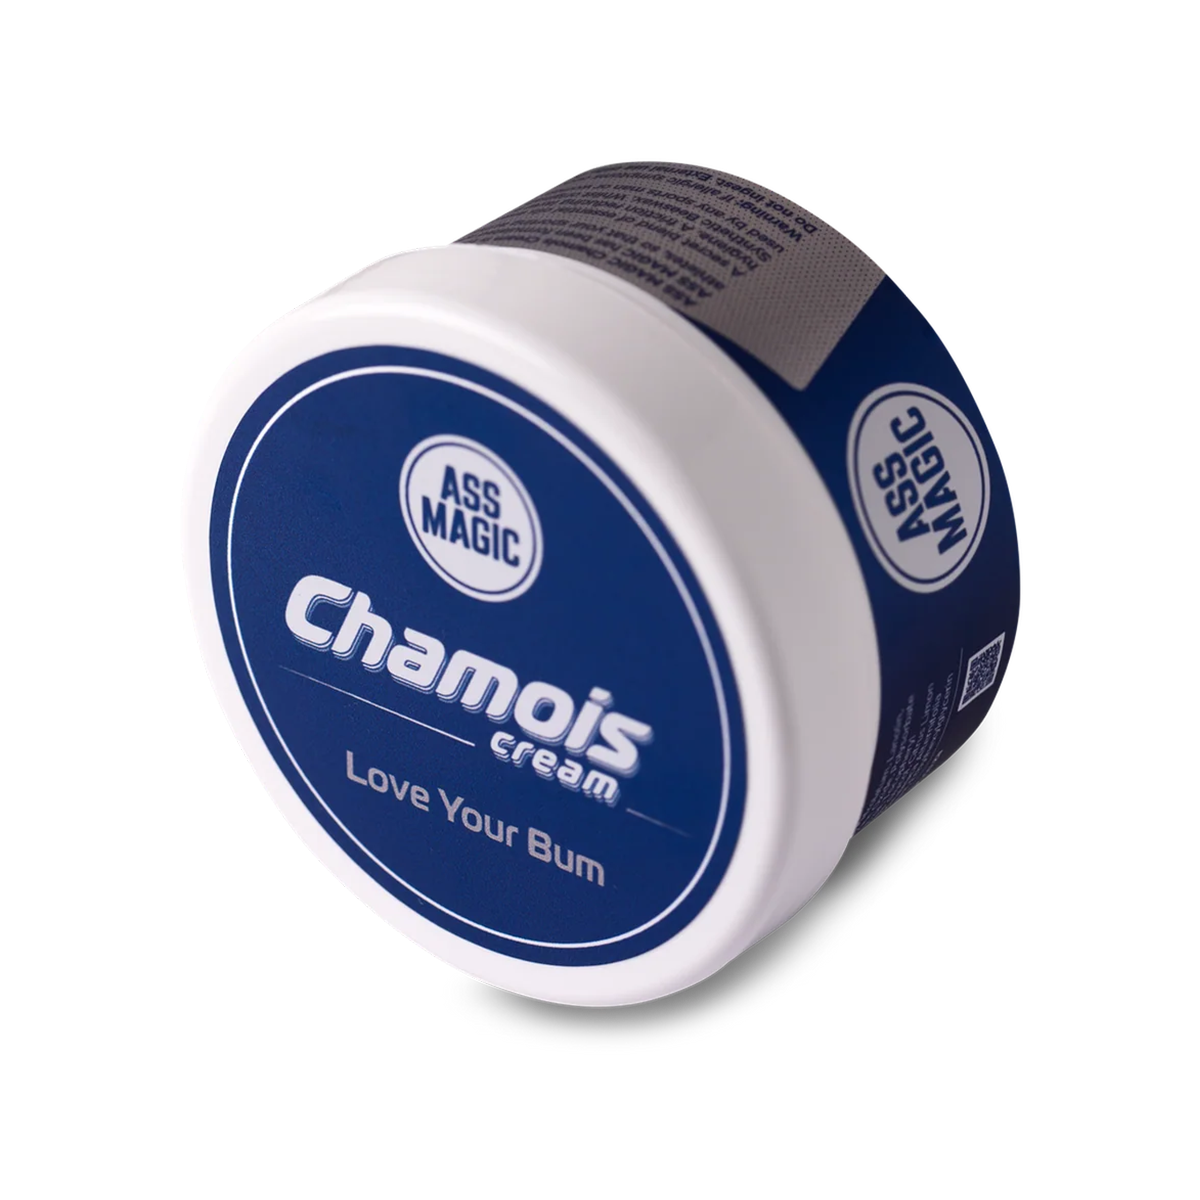 Chamois Cream